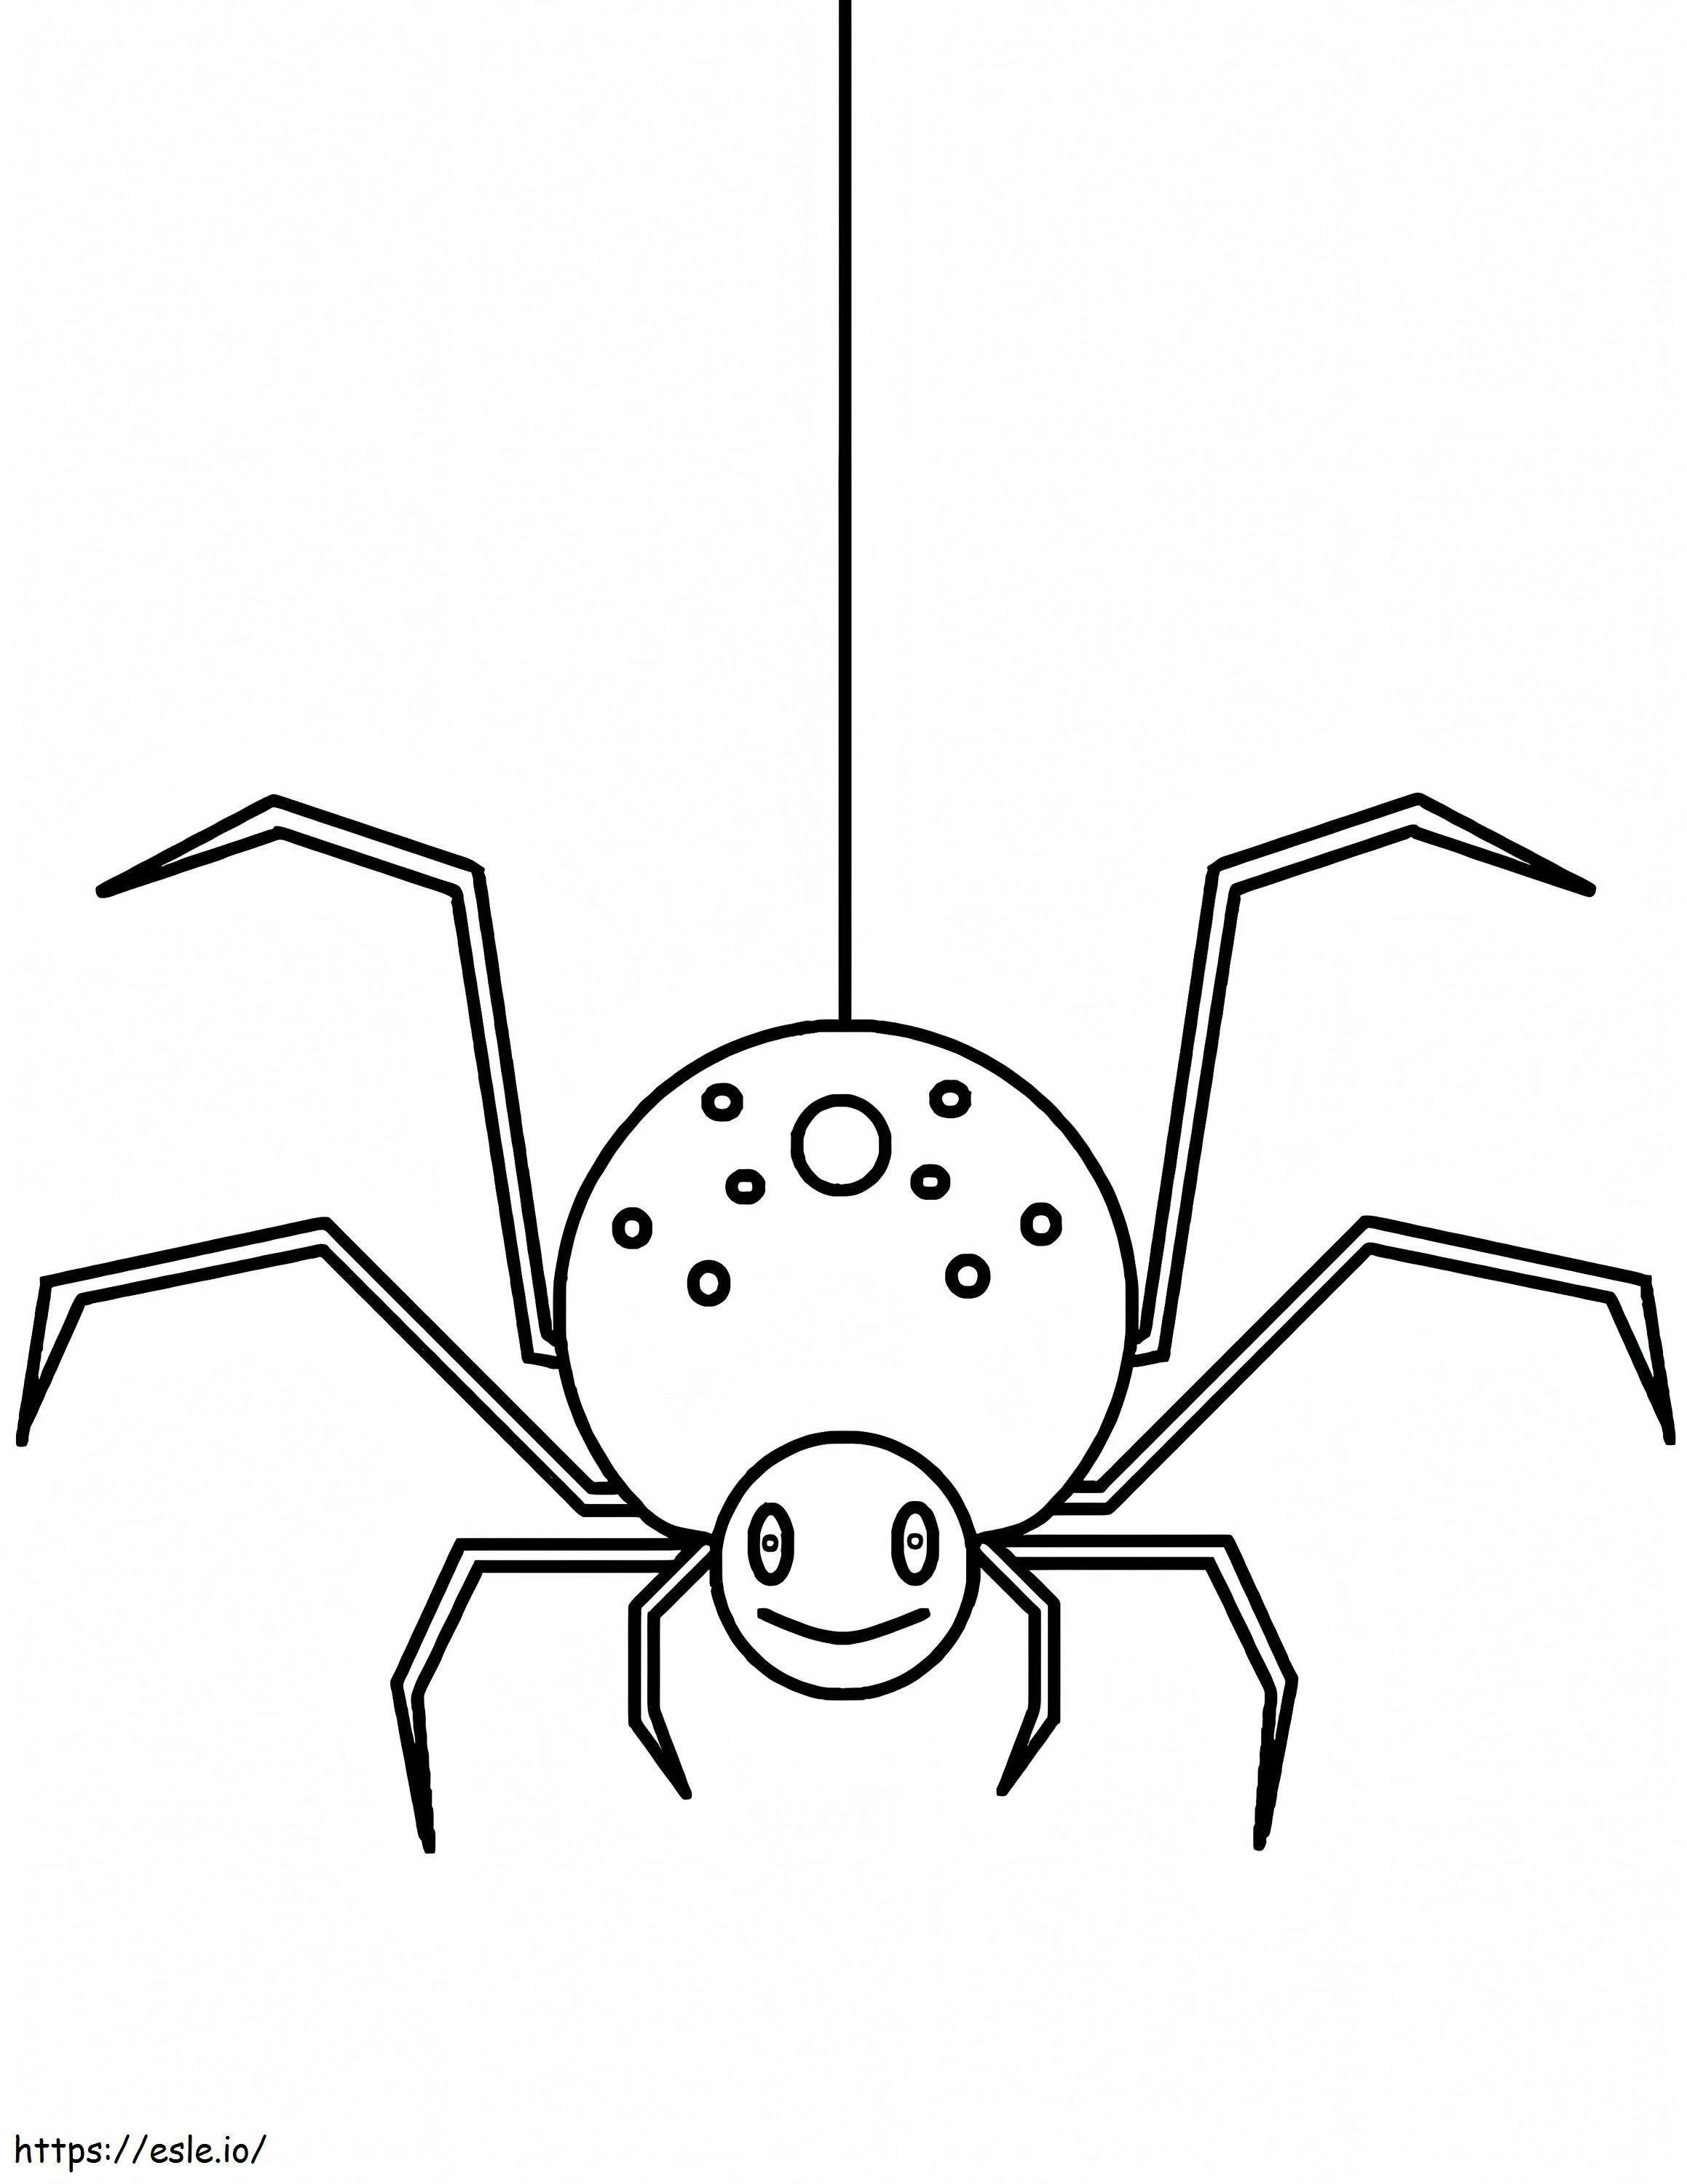 Păianjen ușor de colorat